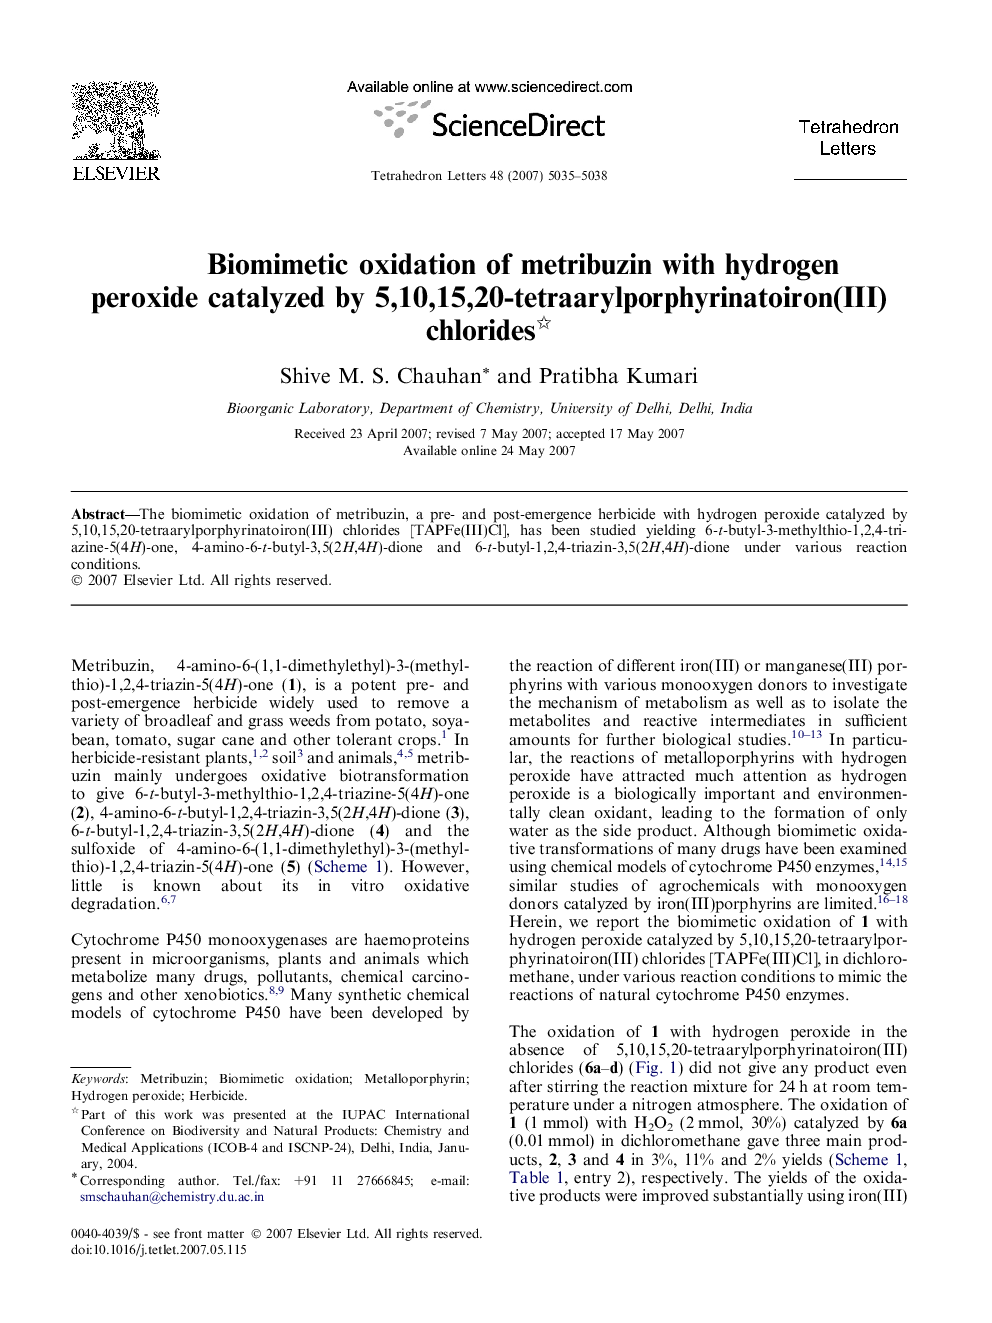 Biomimetic oxidation of metribuzin with hydrogen peroxide catalyzed by 5,10,15,20-tetraarylporphyrinatoiron(III) chlorides